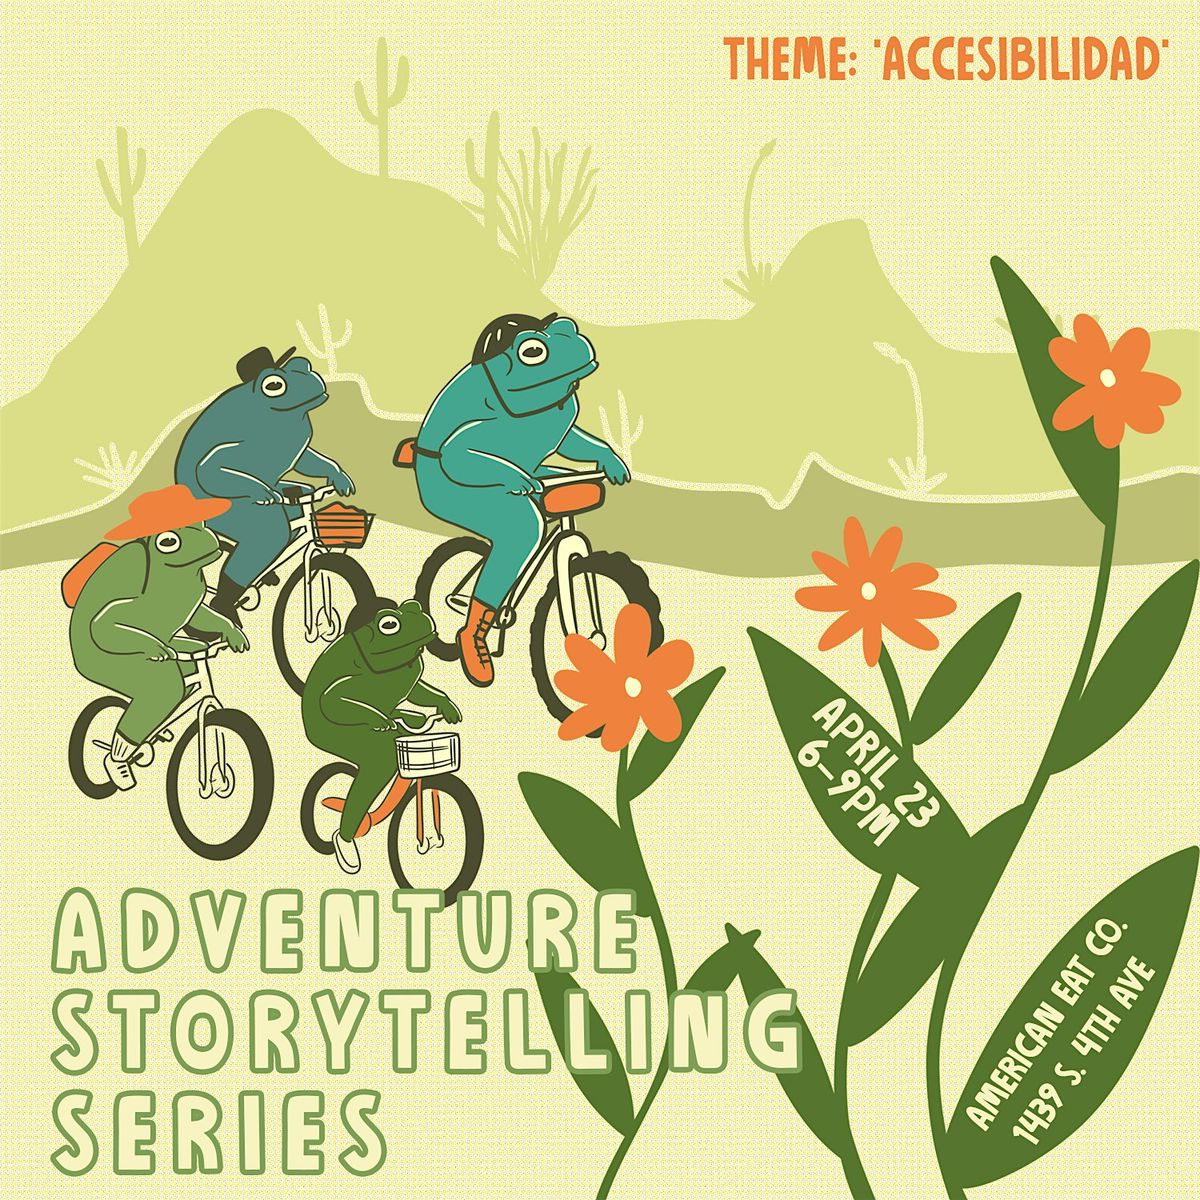 Adventure Story telling Series #4 - Serie de Historias de Aventuras #4